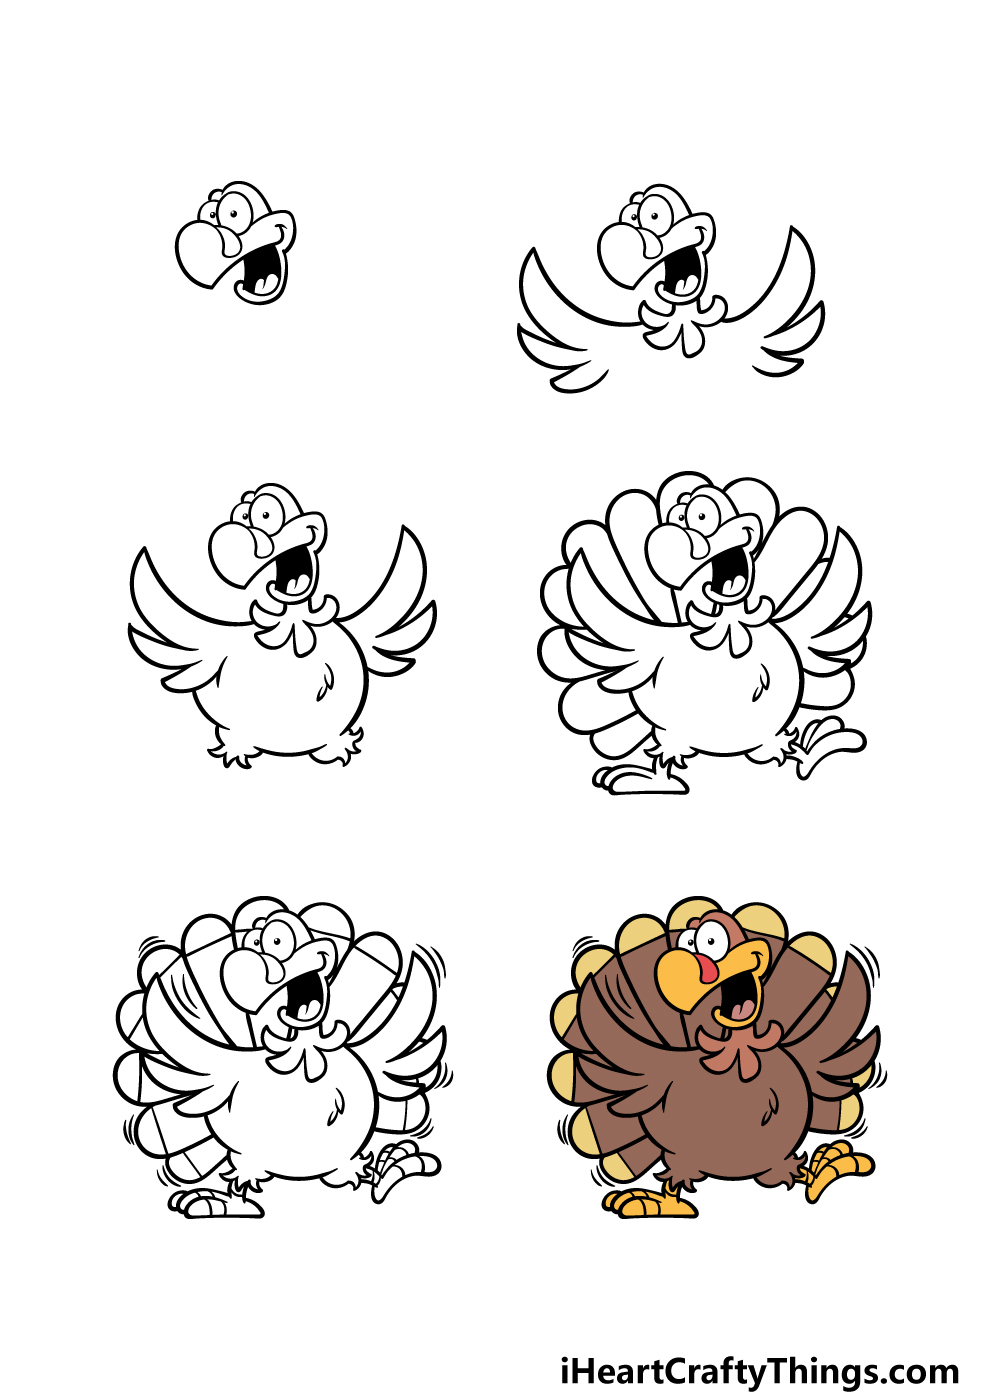 how to draw a cartoon turkey in 6 steps